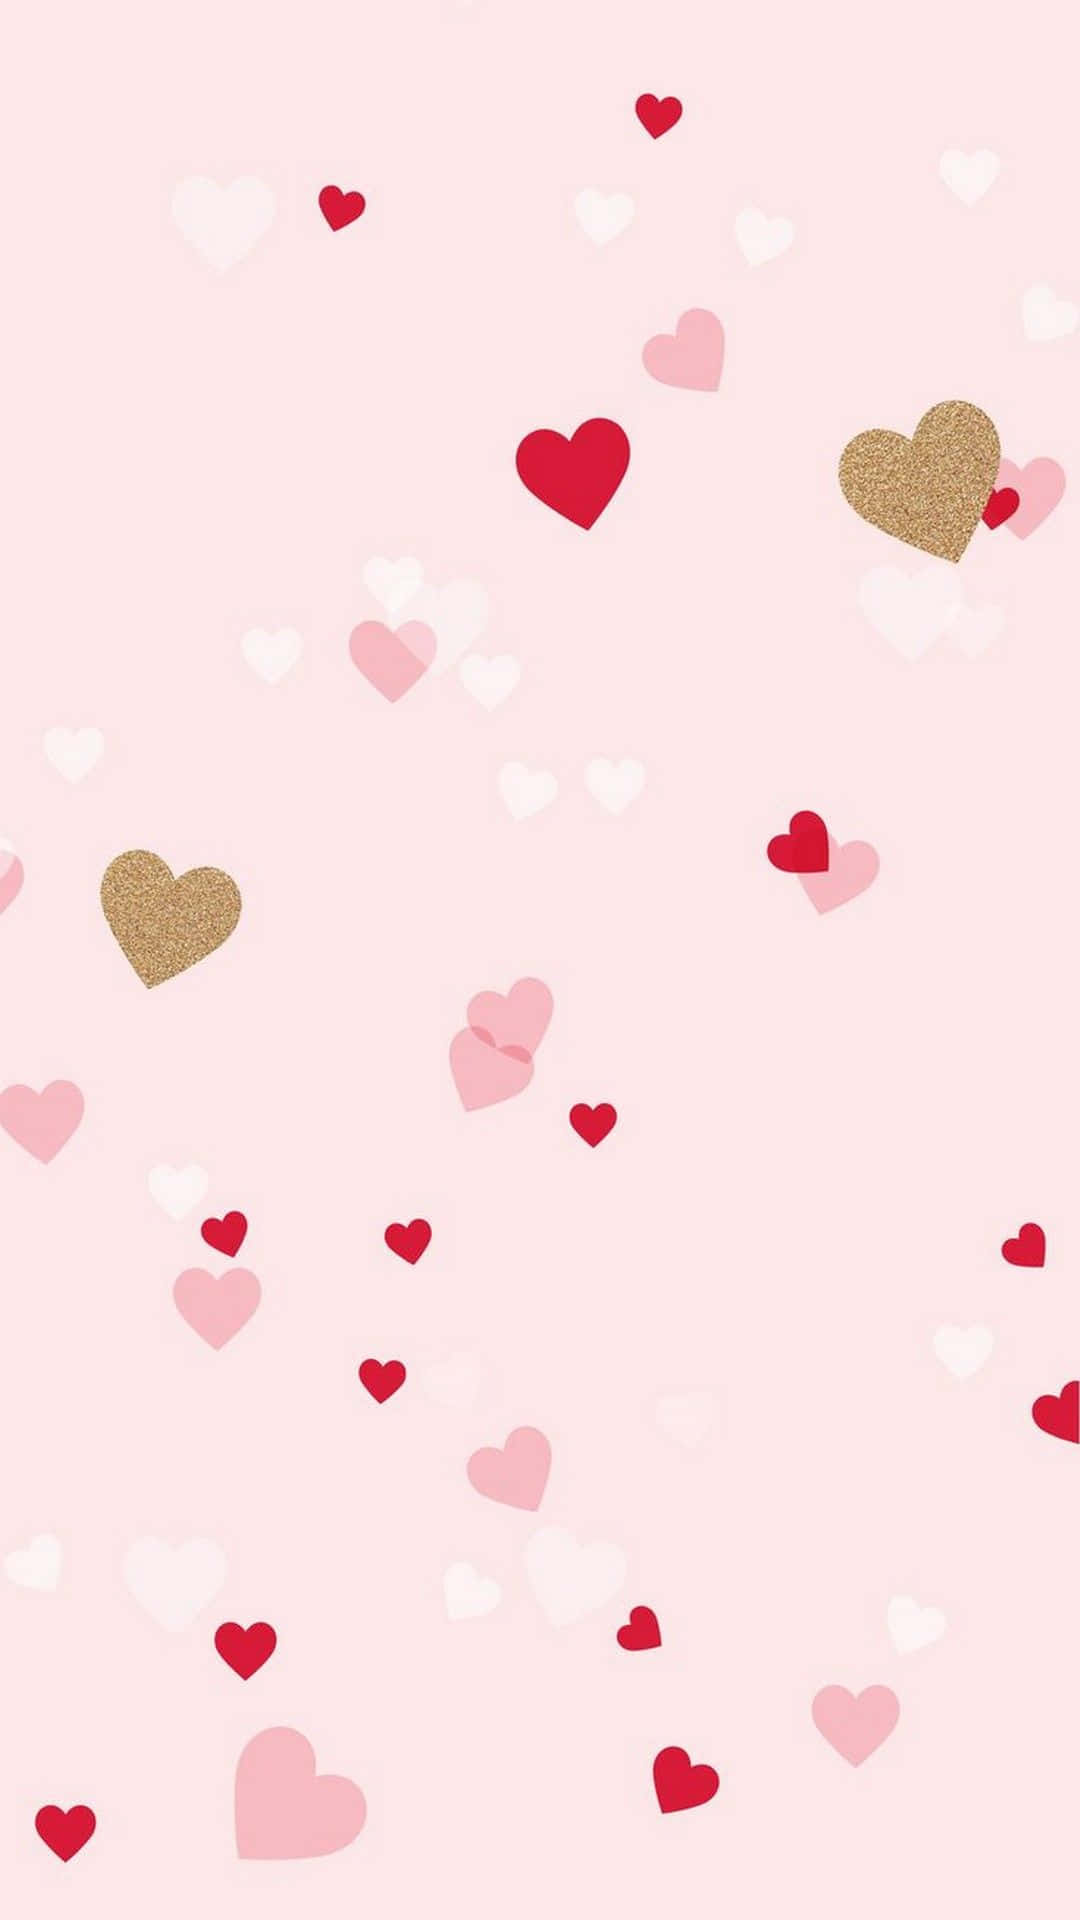 Díade San Valentín - Corazones Rosados - Fondo De Pantalla Fondo de pantalla